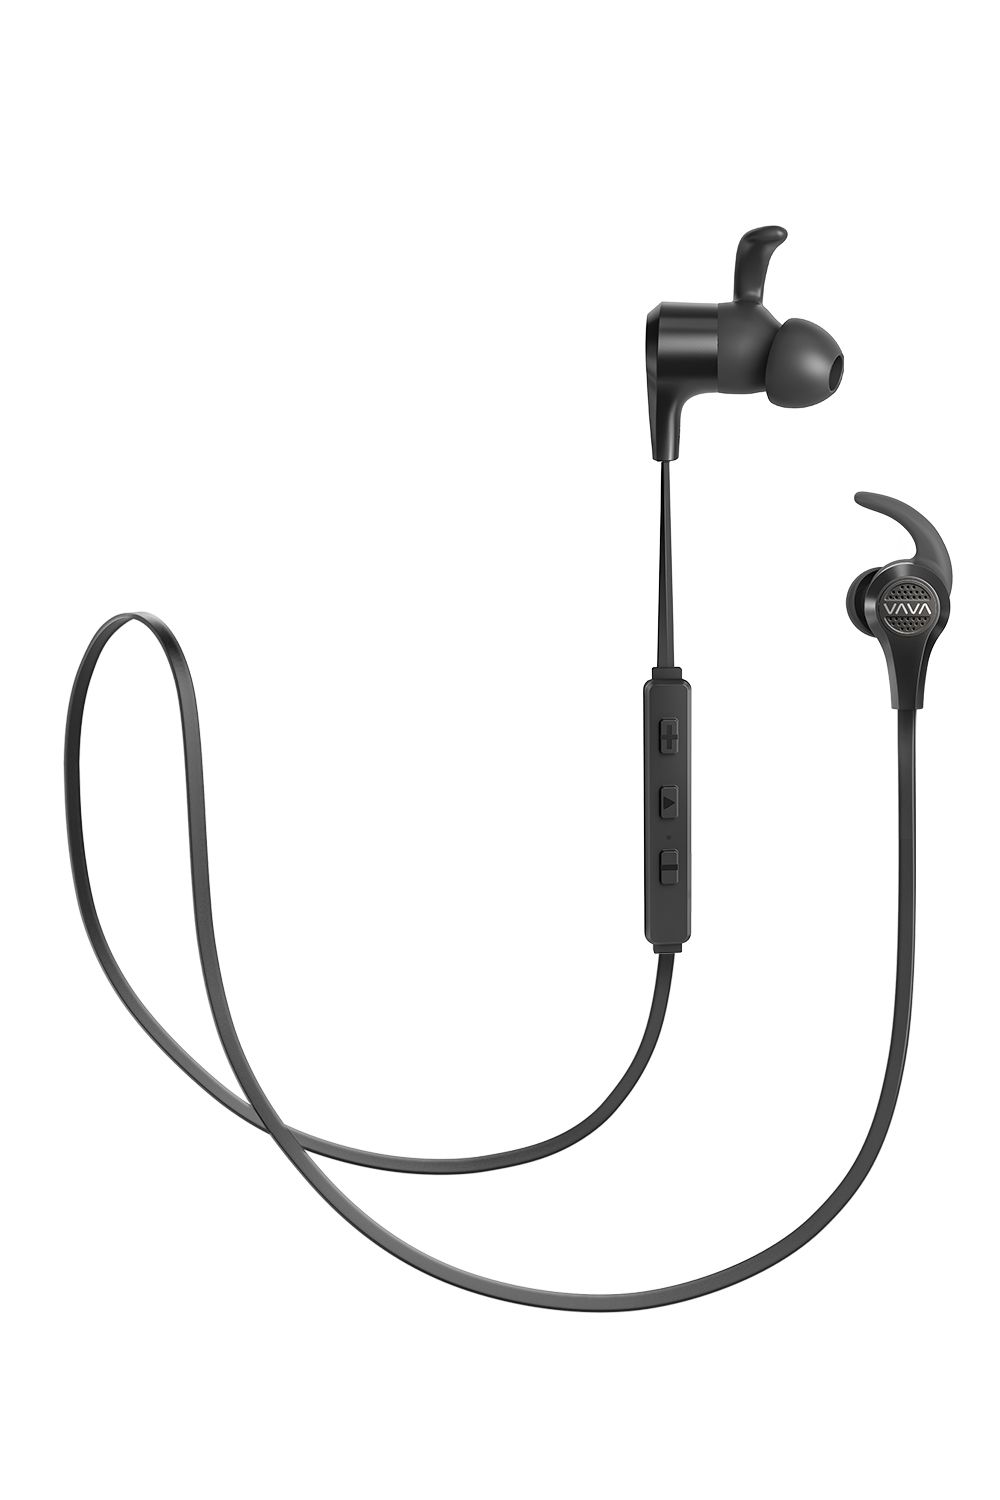 Vava Moov 25 Black Bluetooth In-Ear Earphones